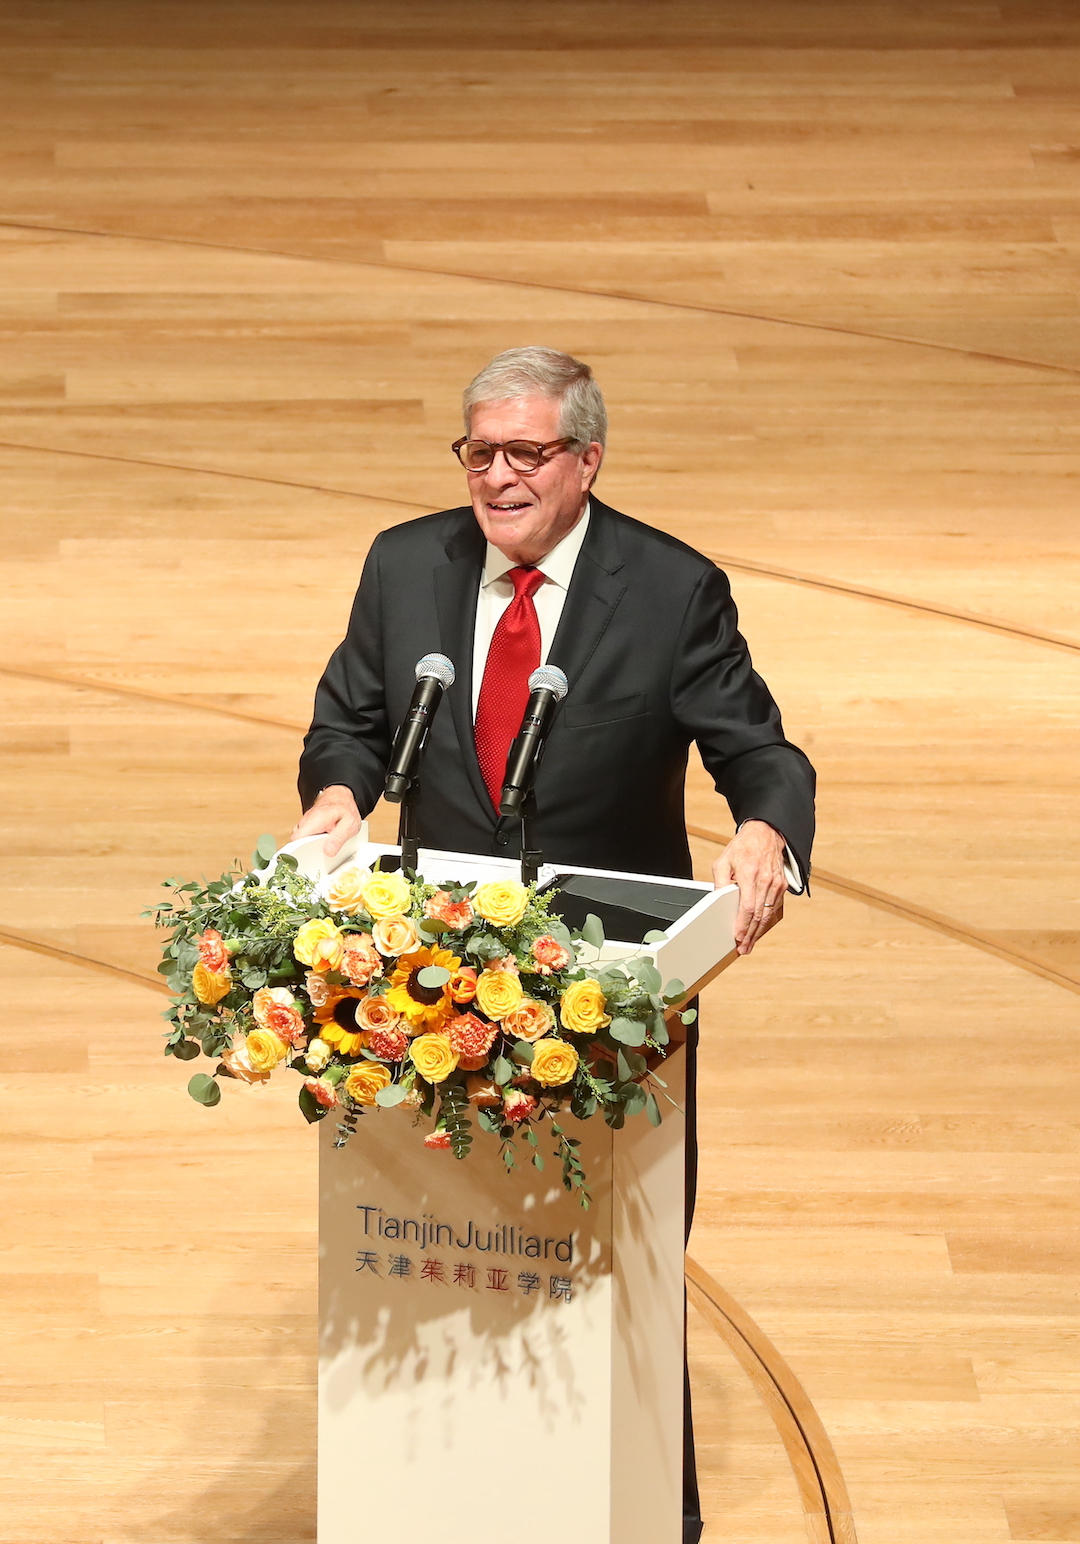 Joseph Polisi at a podium